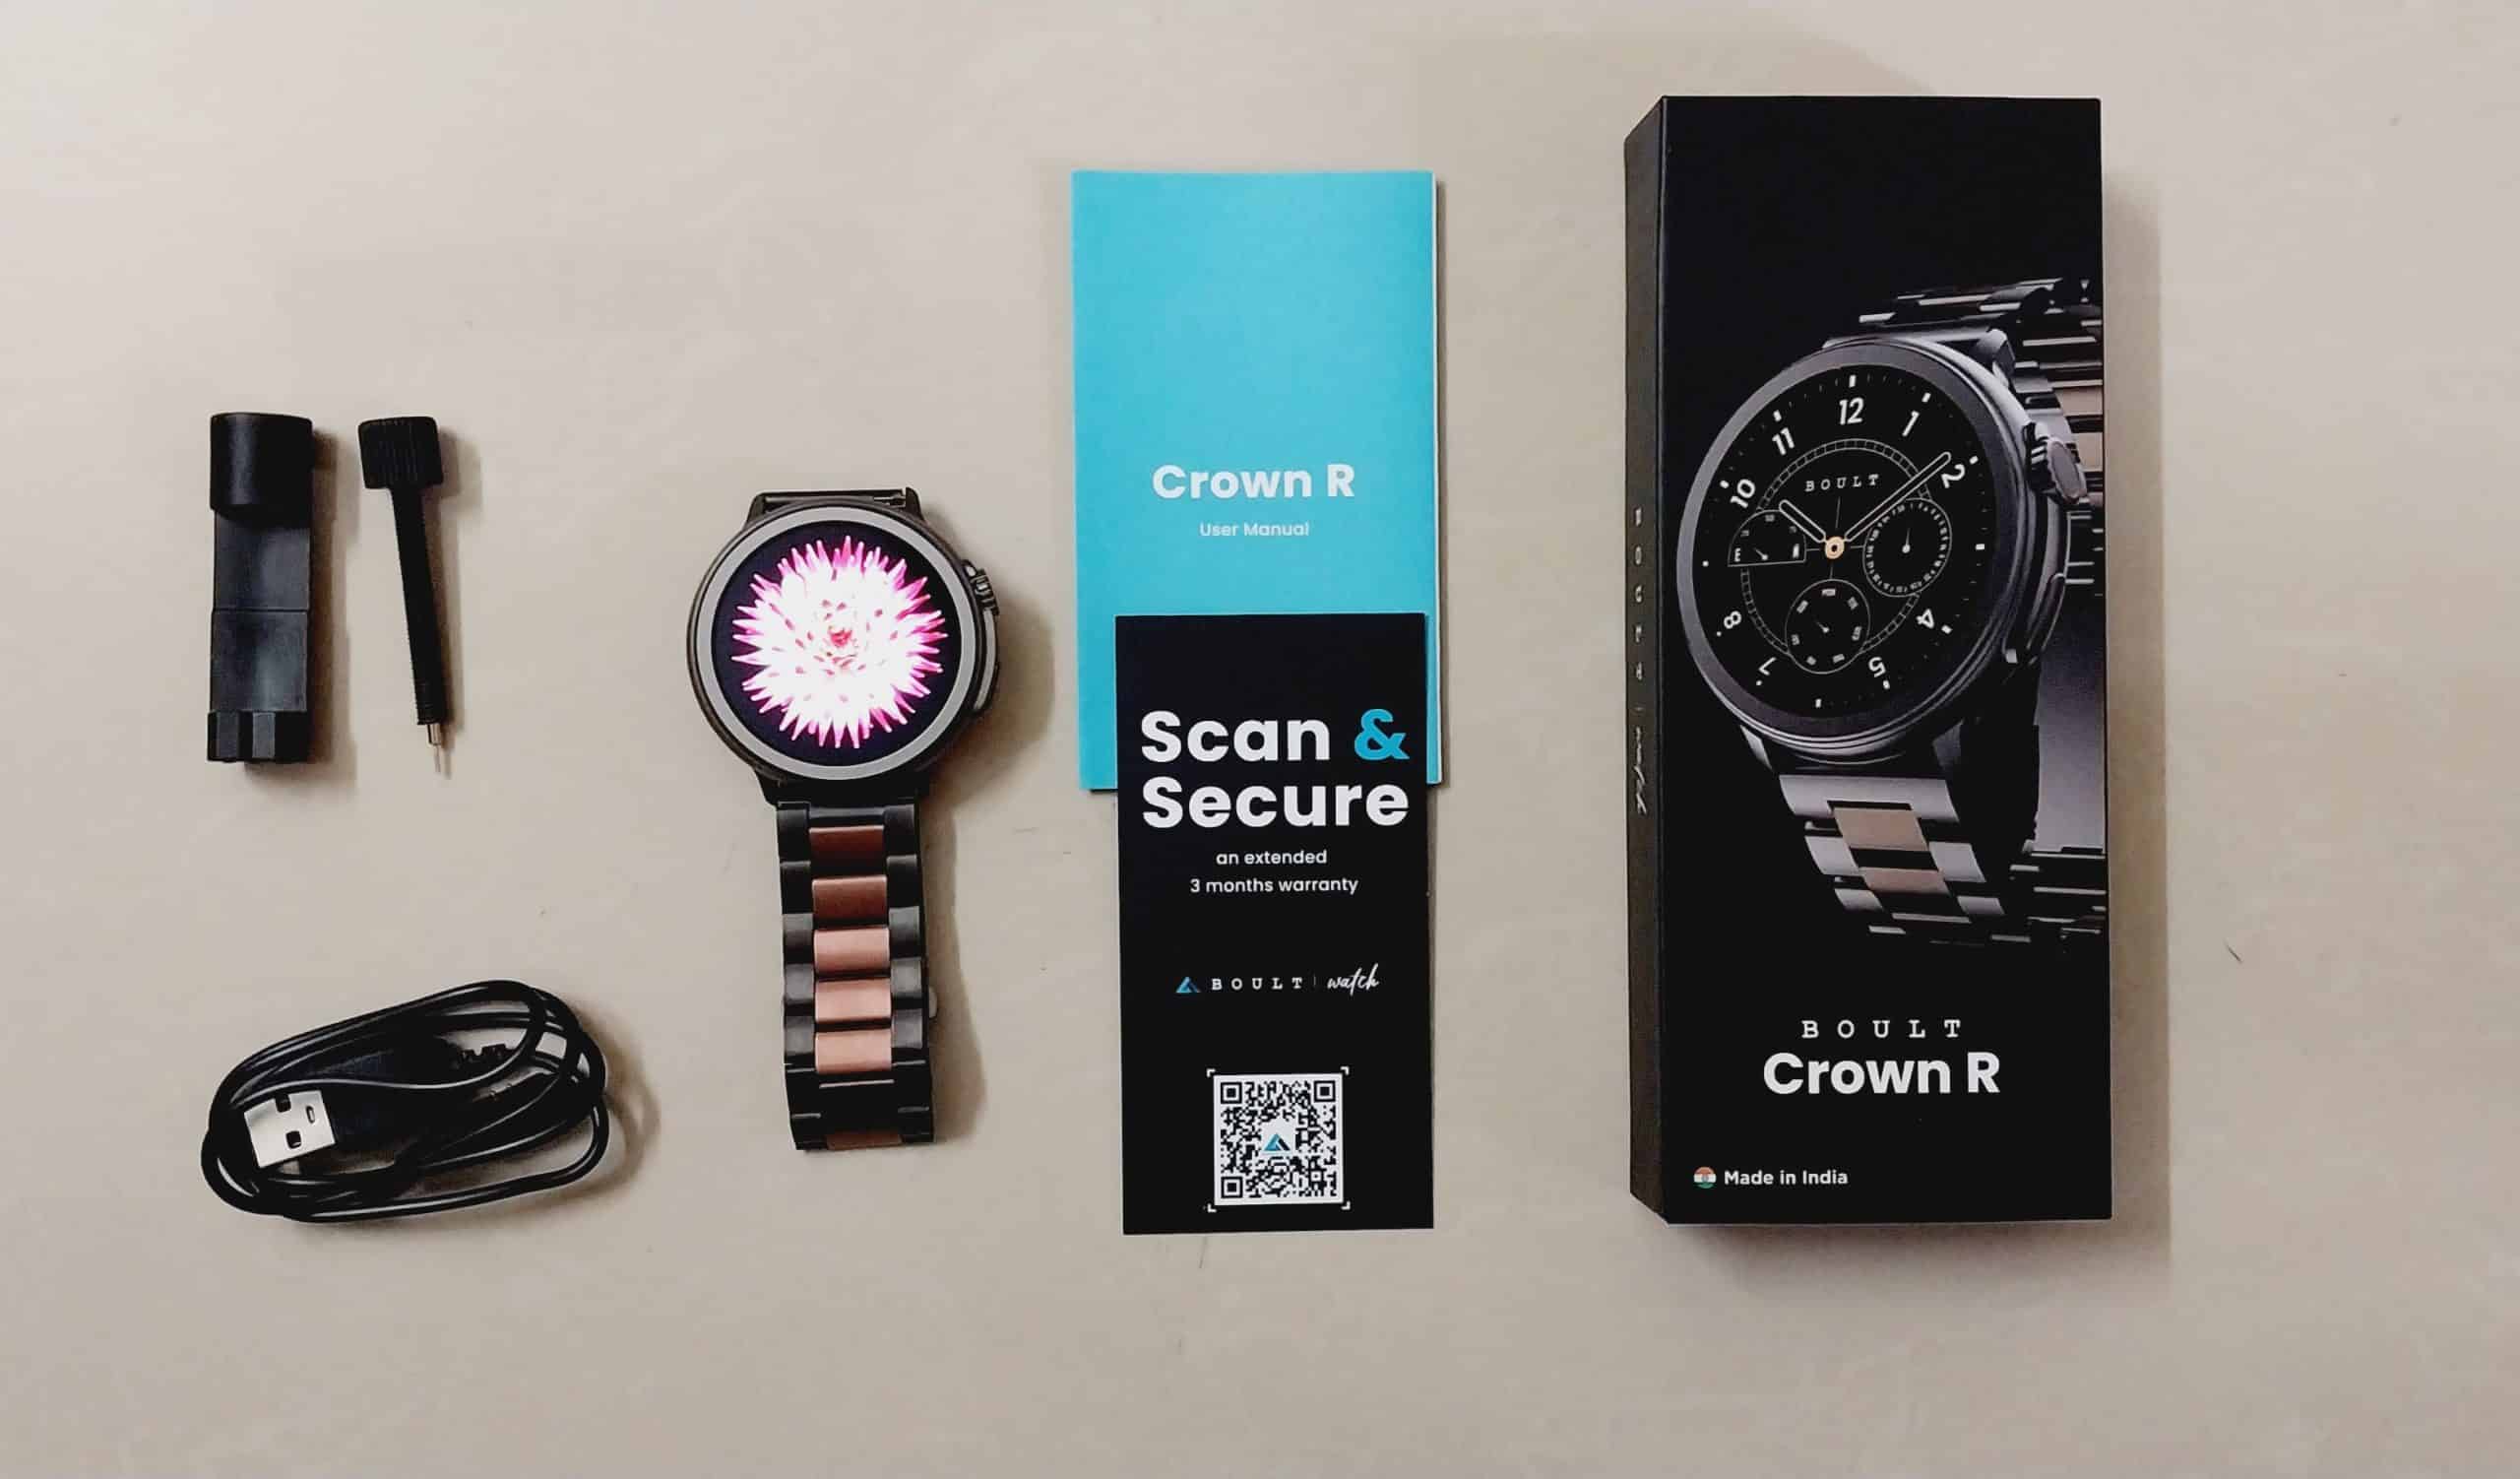 Should You Buy Boult Crown R Smartwatch?